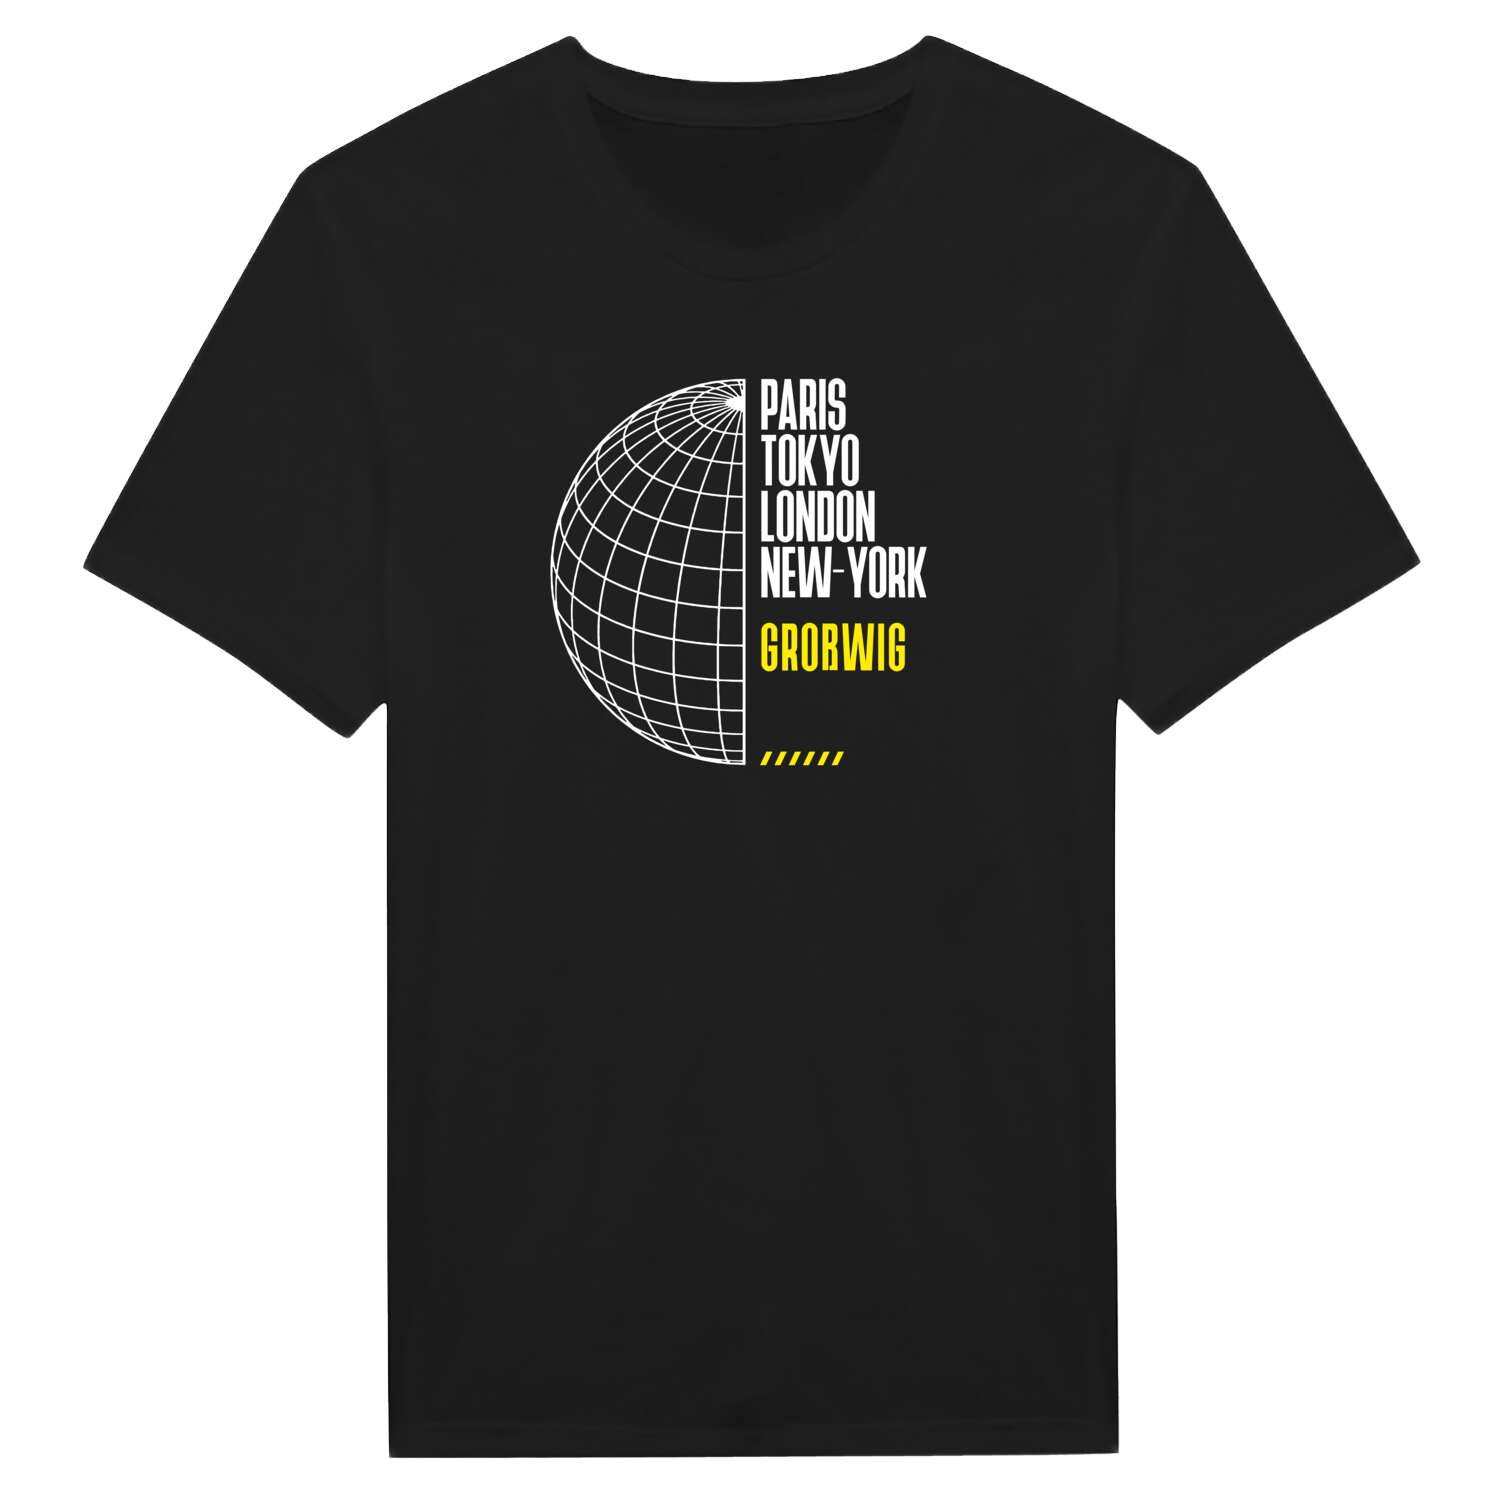 Großwig T-Shirt »Paris Tokyo London«